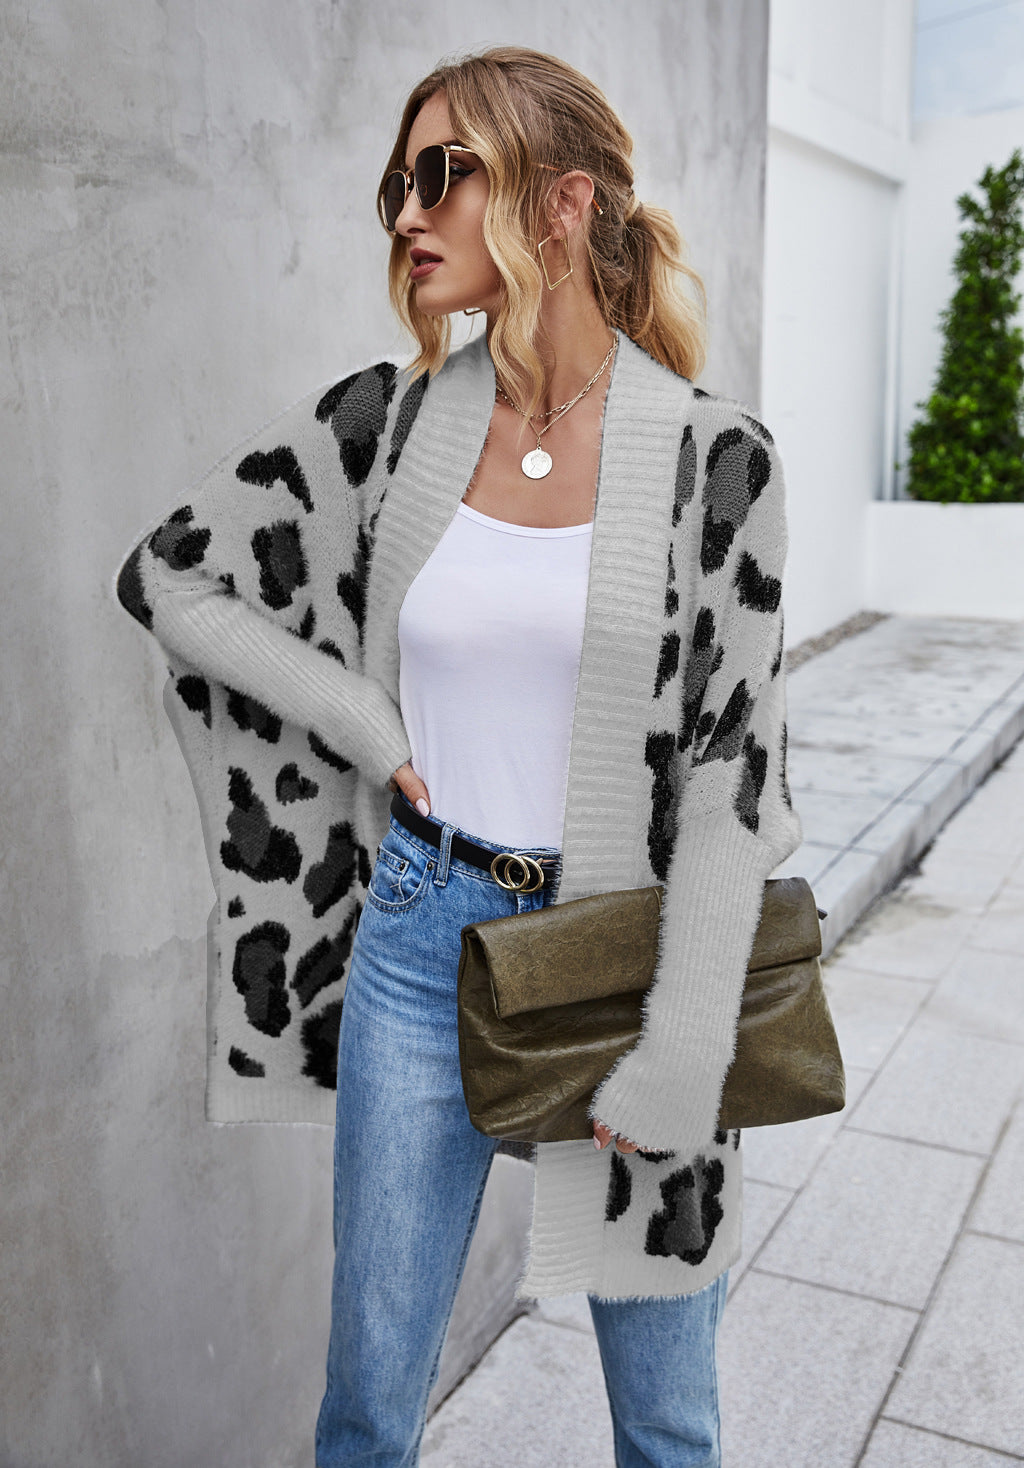 Winter Women's Large Size Cardigan Street Coat Personality Fashion Leopard Print Sweater